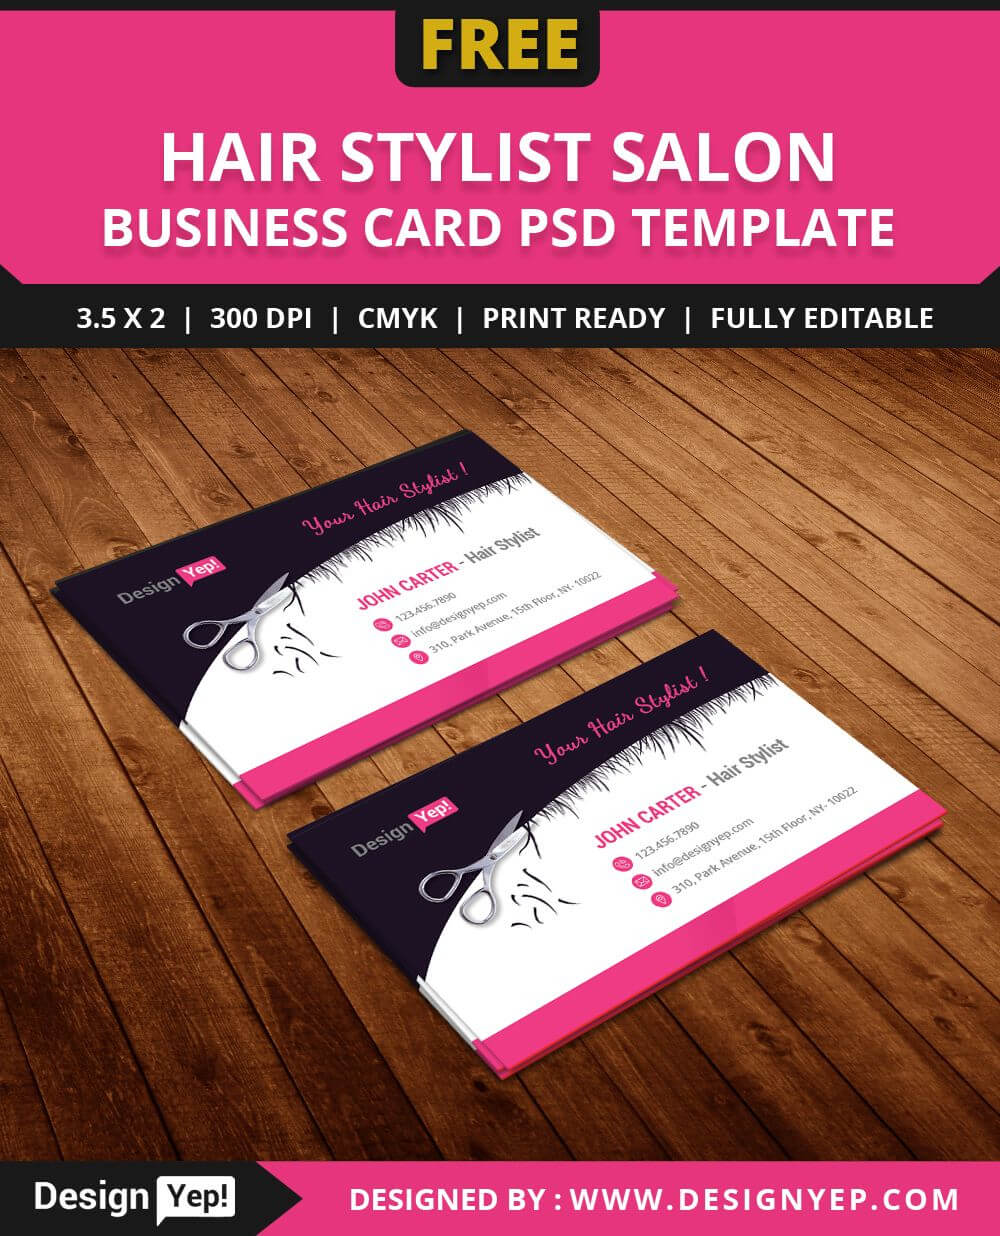 Free Hair Stylist Salon Business Card Template Psd | Salon In Hair Salon Business Card Template